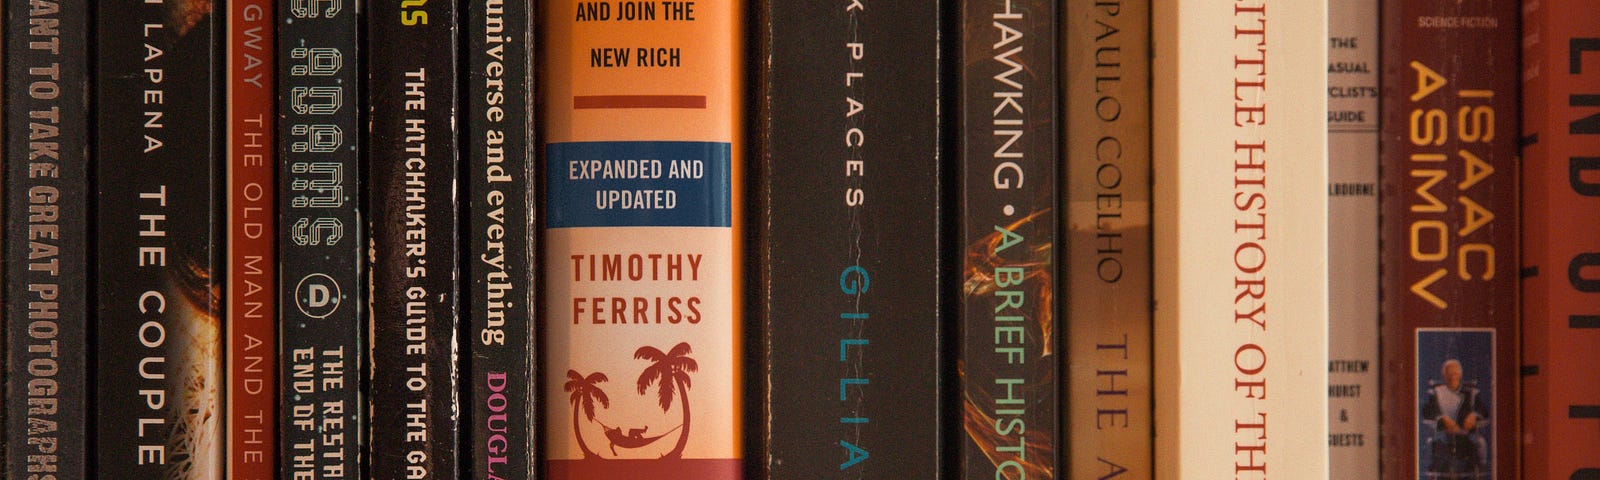 Closeup of book spines along a bookshelf